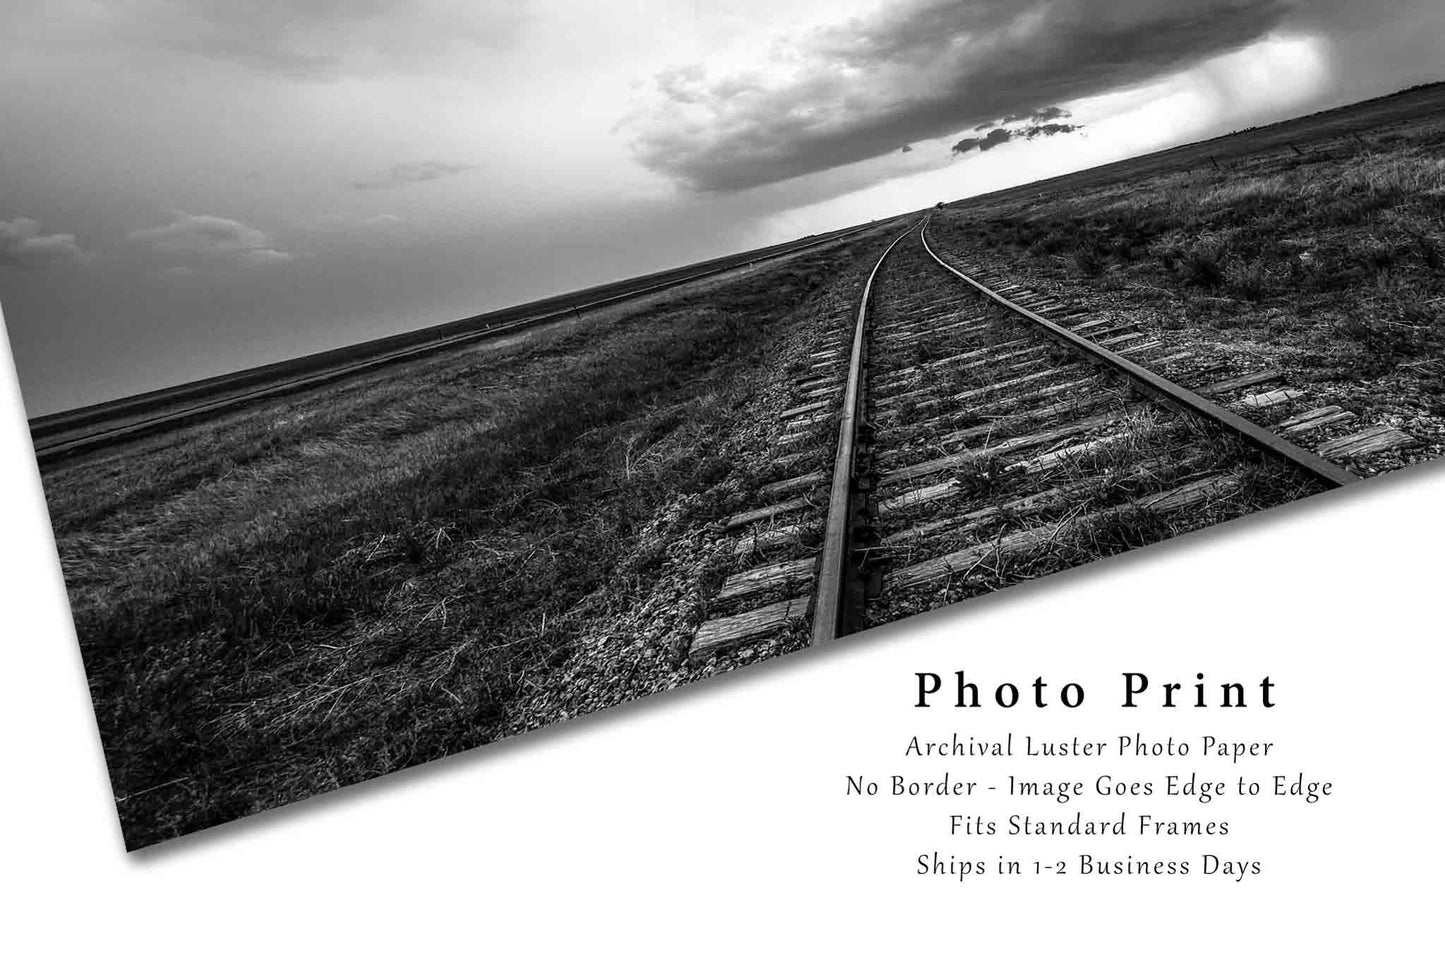 Storm Photography Print | Wanderlust Picture | Kansas Wall Art | Train Tracks Photo | Railroad Decor | Not Framed